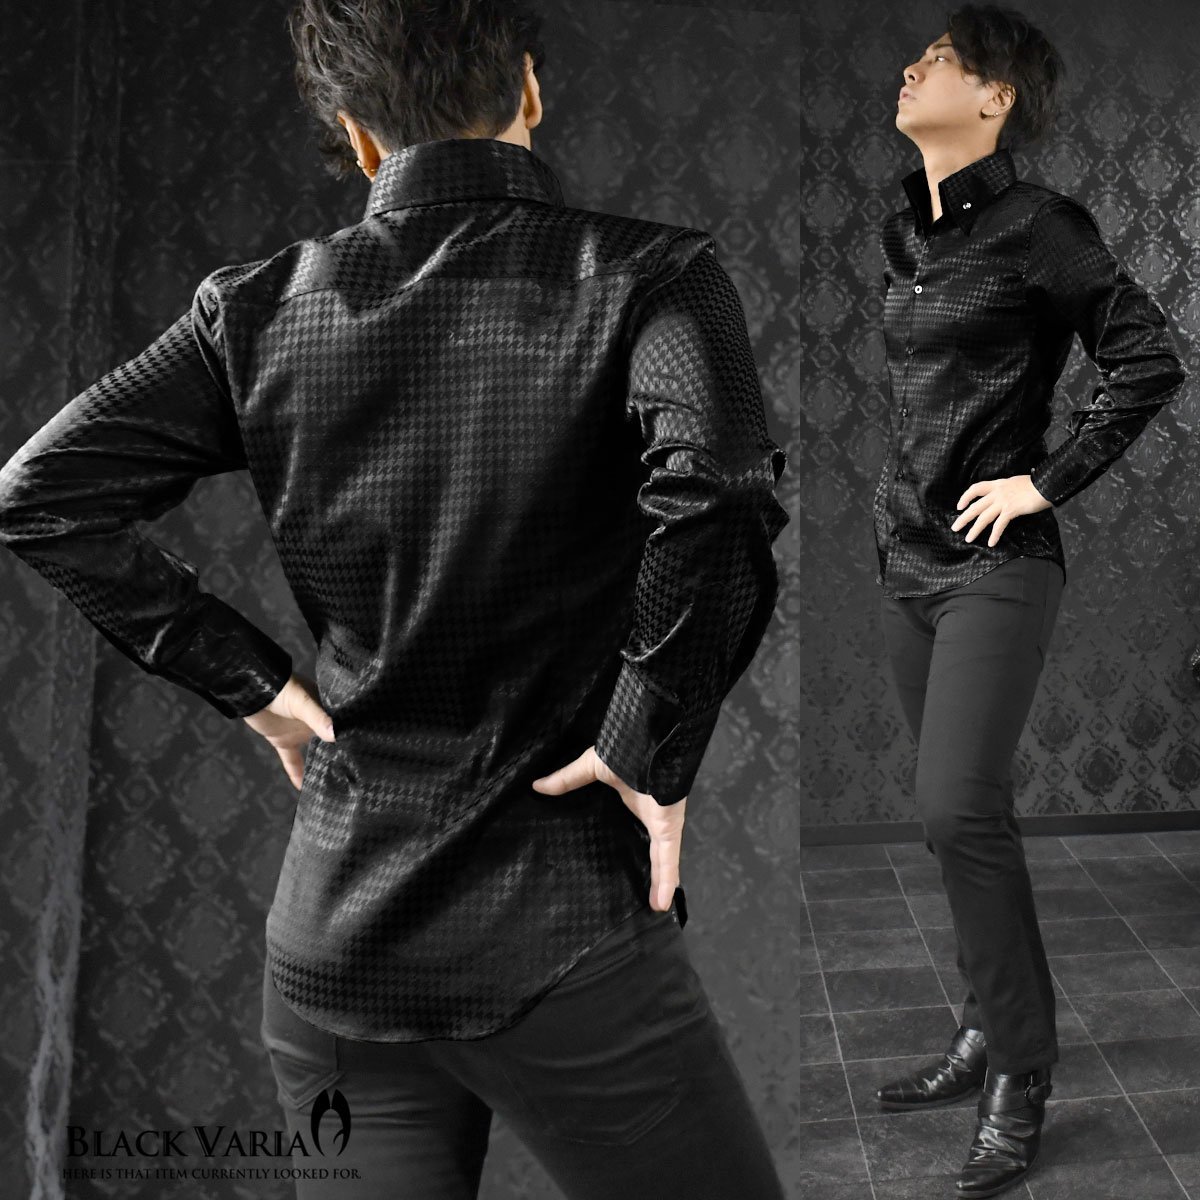 191255-bkS BLACK VARIA ジャガード千鳥柄 スキッパー スワロフスキーBD ドレスシャツ スリム メンズ(クリスタル釦・ブラック黒) L_襟元ボタンはクリスタル釦です